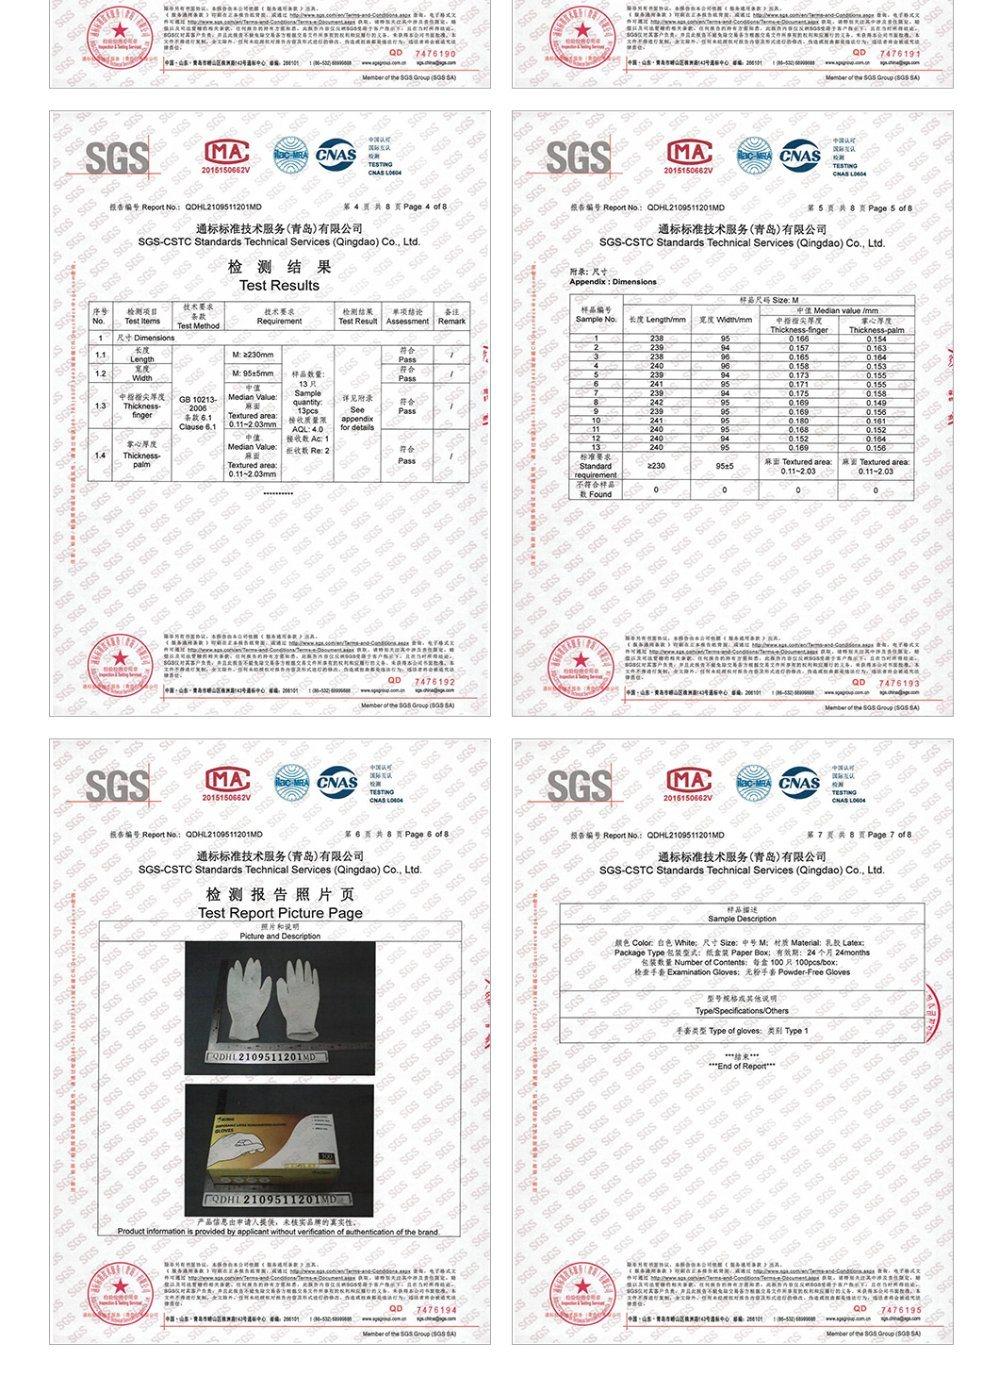 Disposable Work Protective Medical Examination Powder Free Latex Nitrile Vinyl Gloves